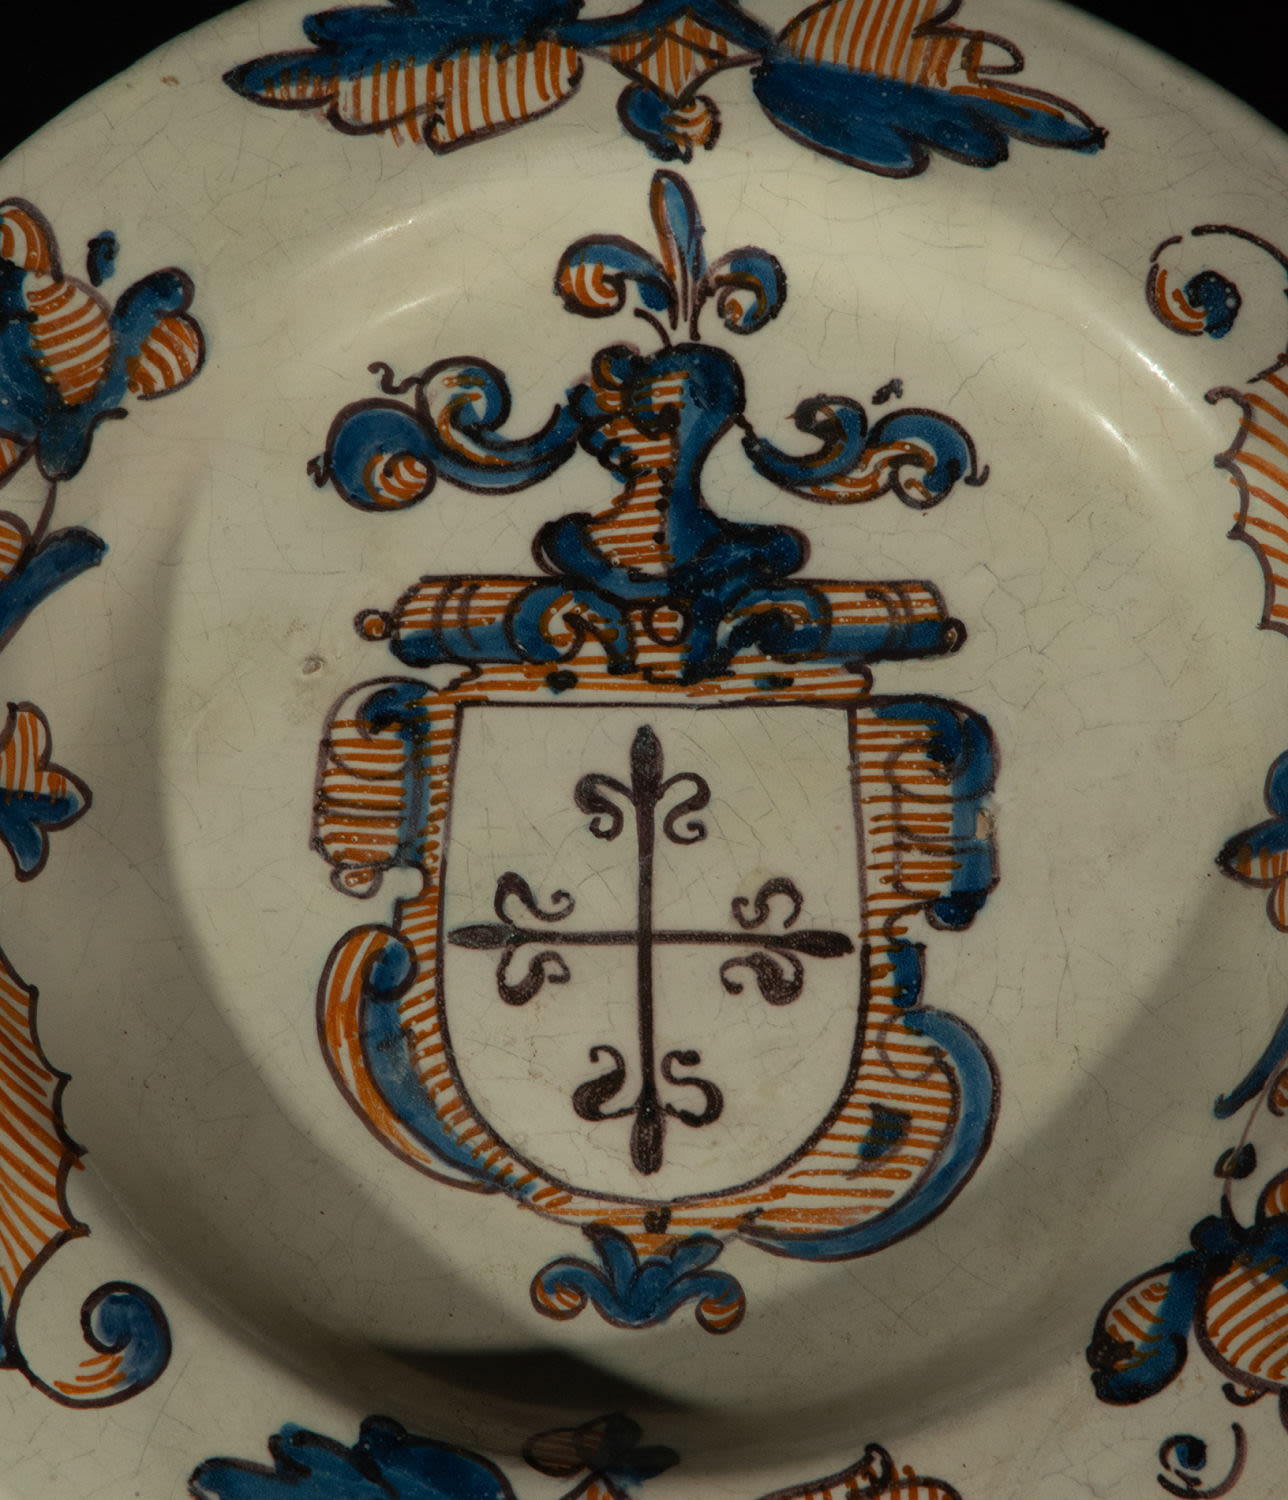 Talavera ceramic plate with Carmelite shield, 17th century - Image 2 of 3